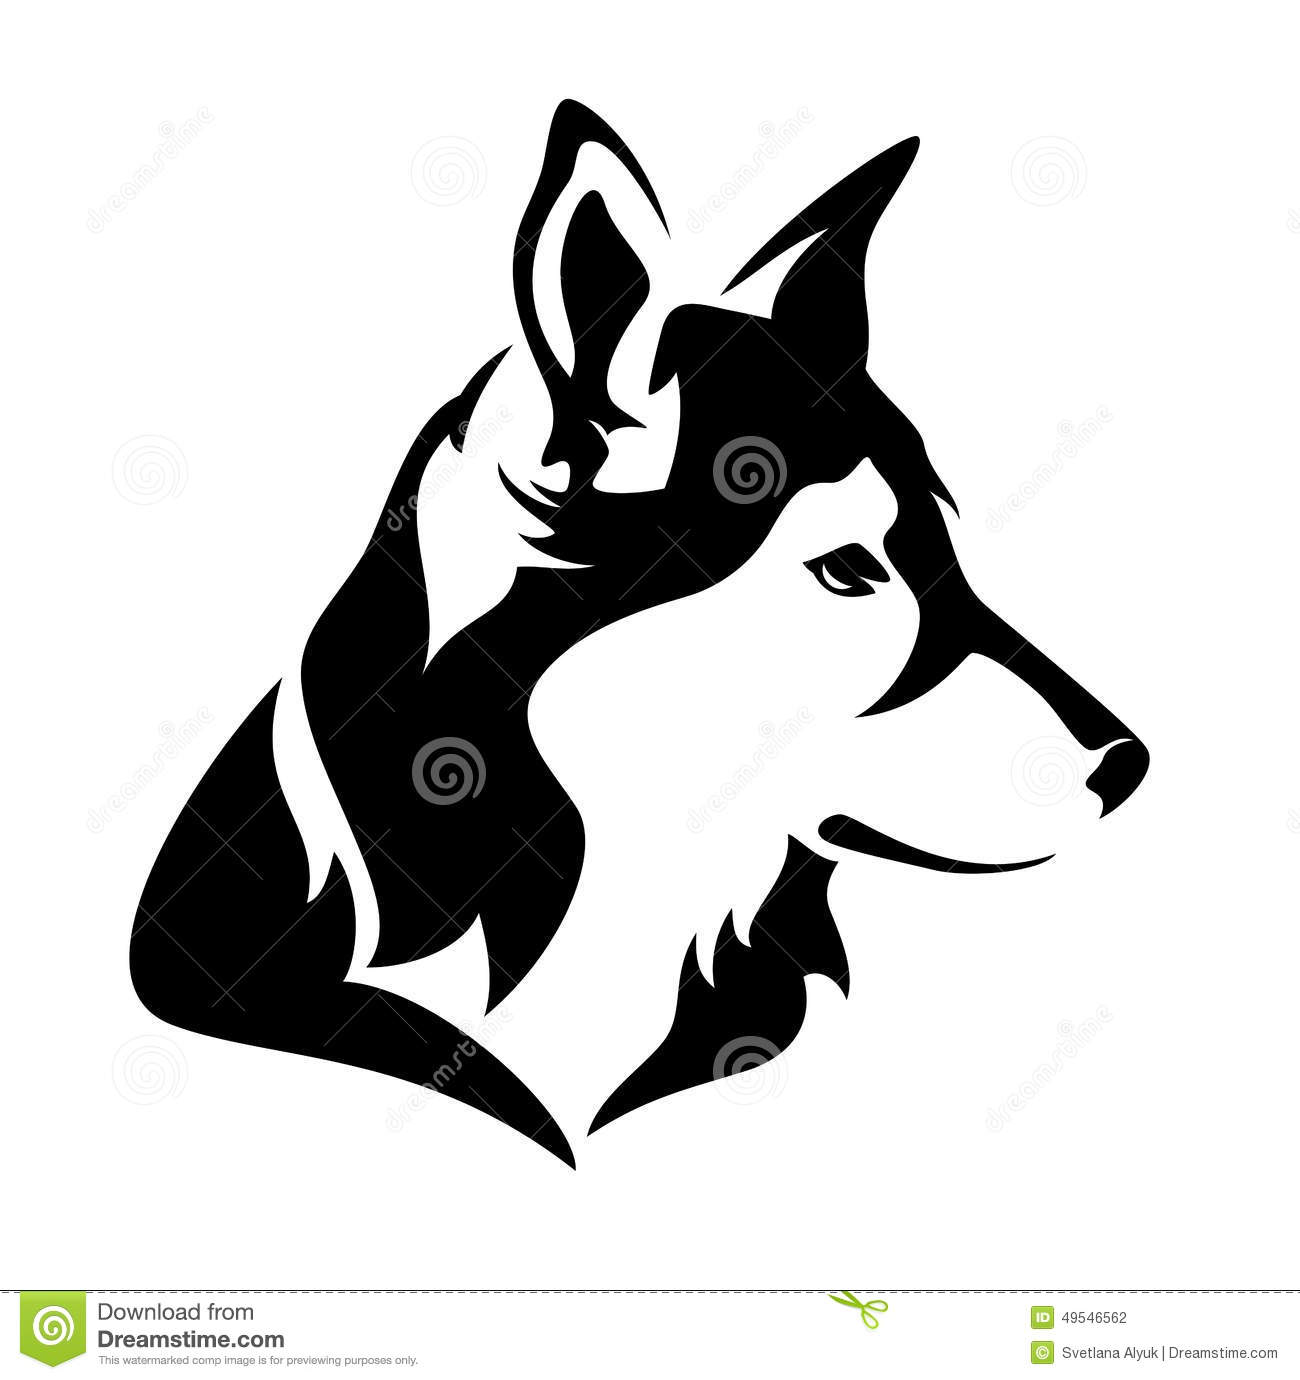 Black and White Dog Head Profile